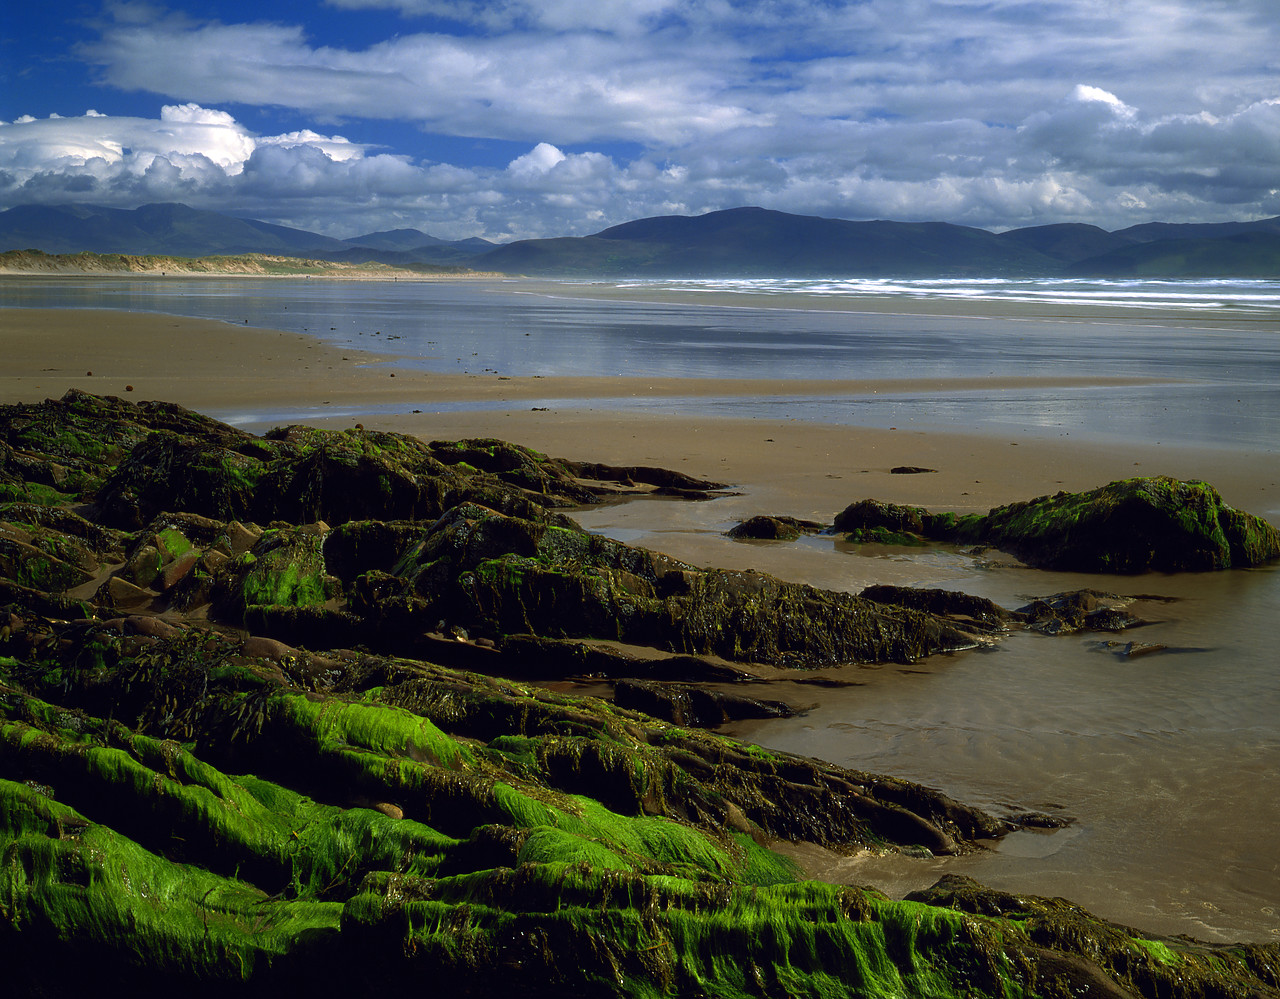 #902903-2 - Inch Beach, Dingle Peninsula, Co. Kerry, Ireland